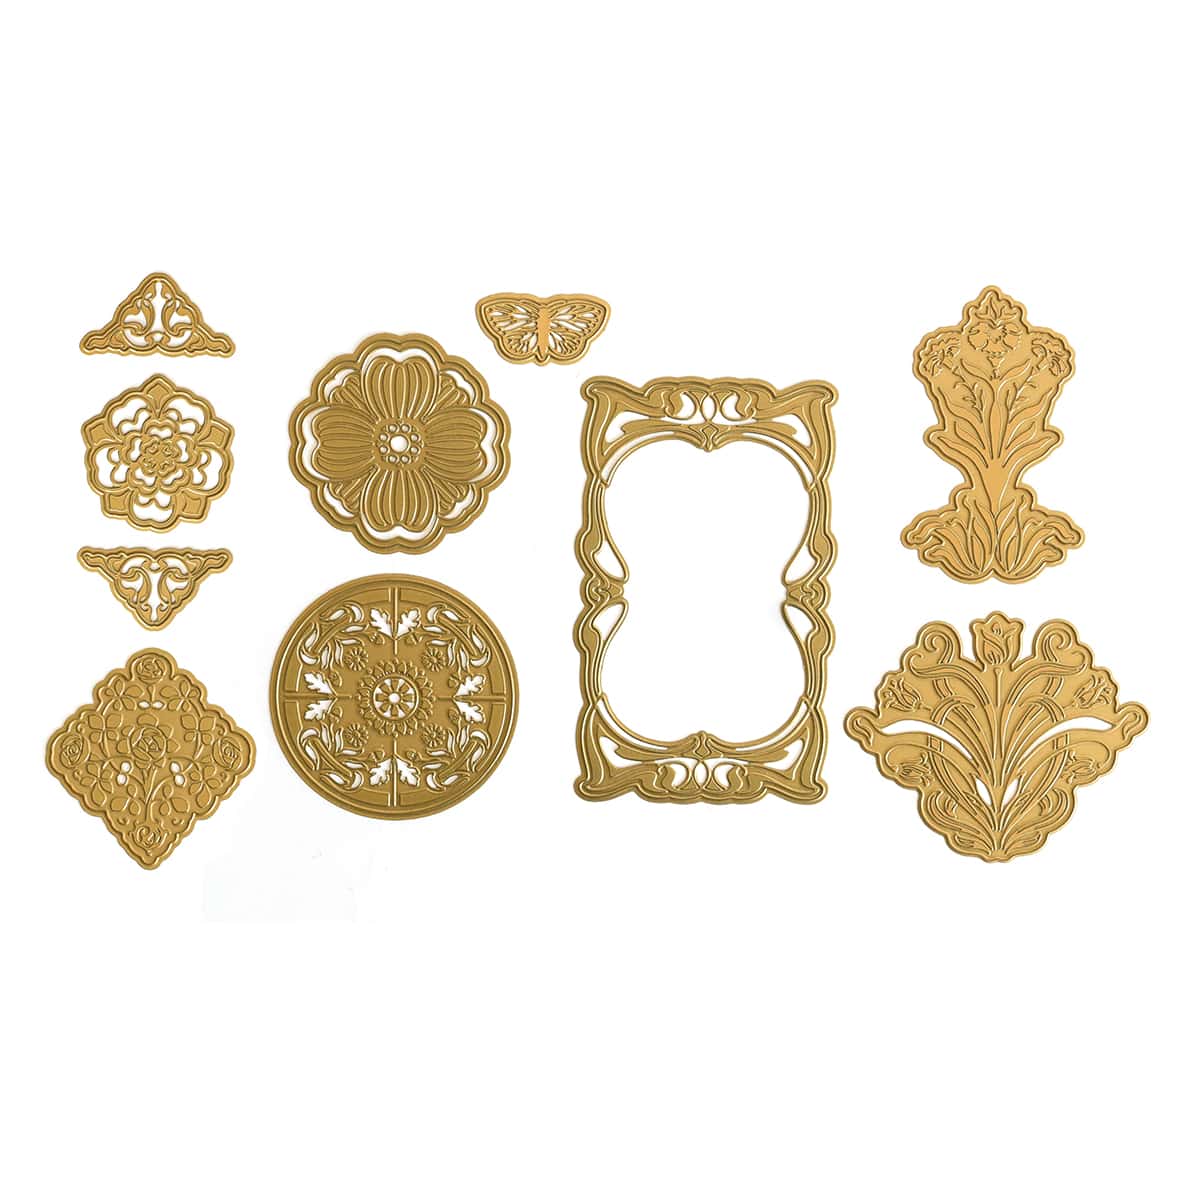 a set of decorative gold frames.